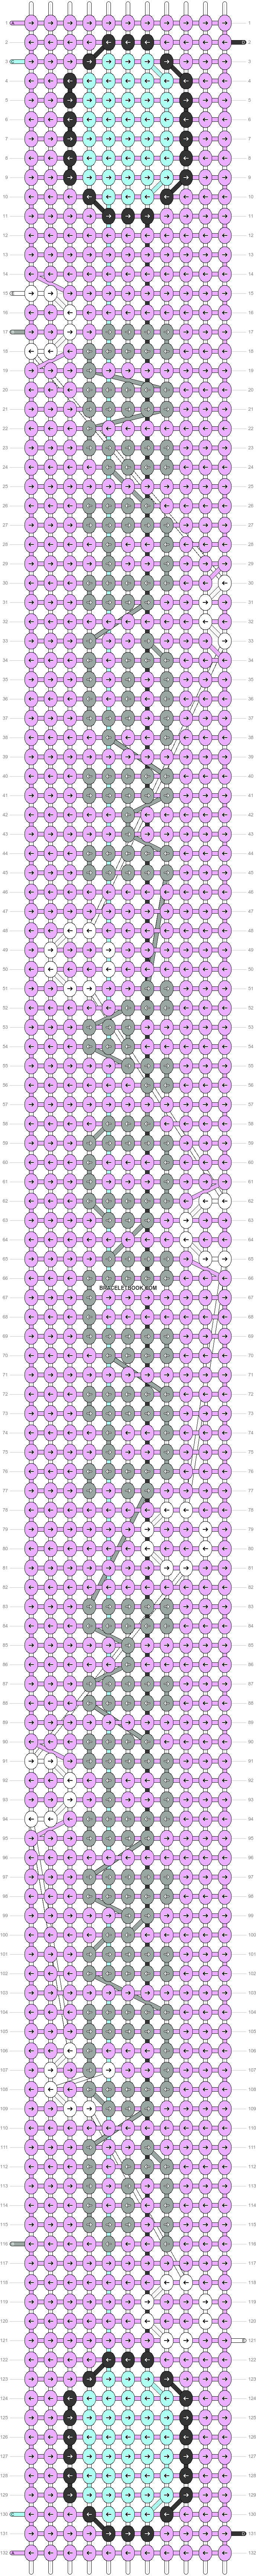 Alpha pattern #46530 variation #70518 pattern